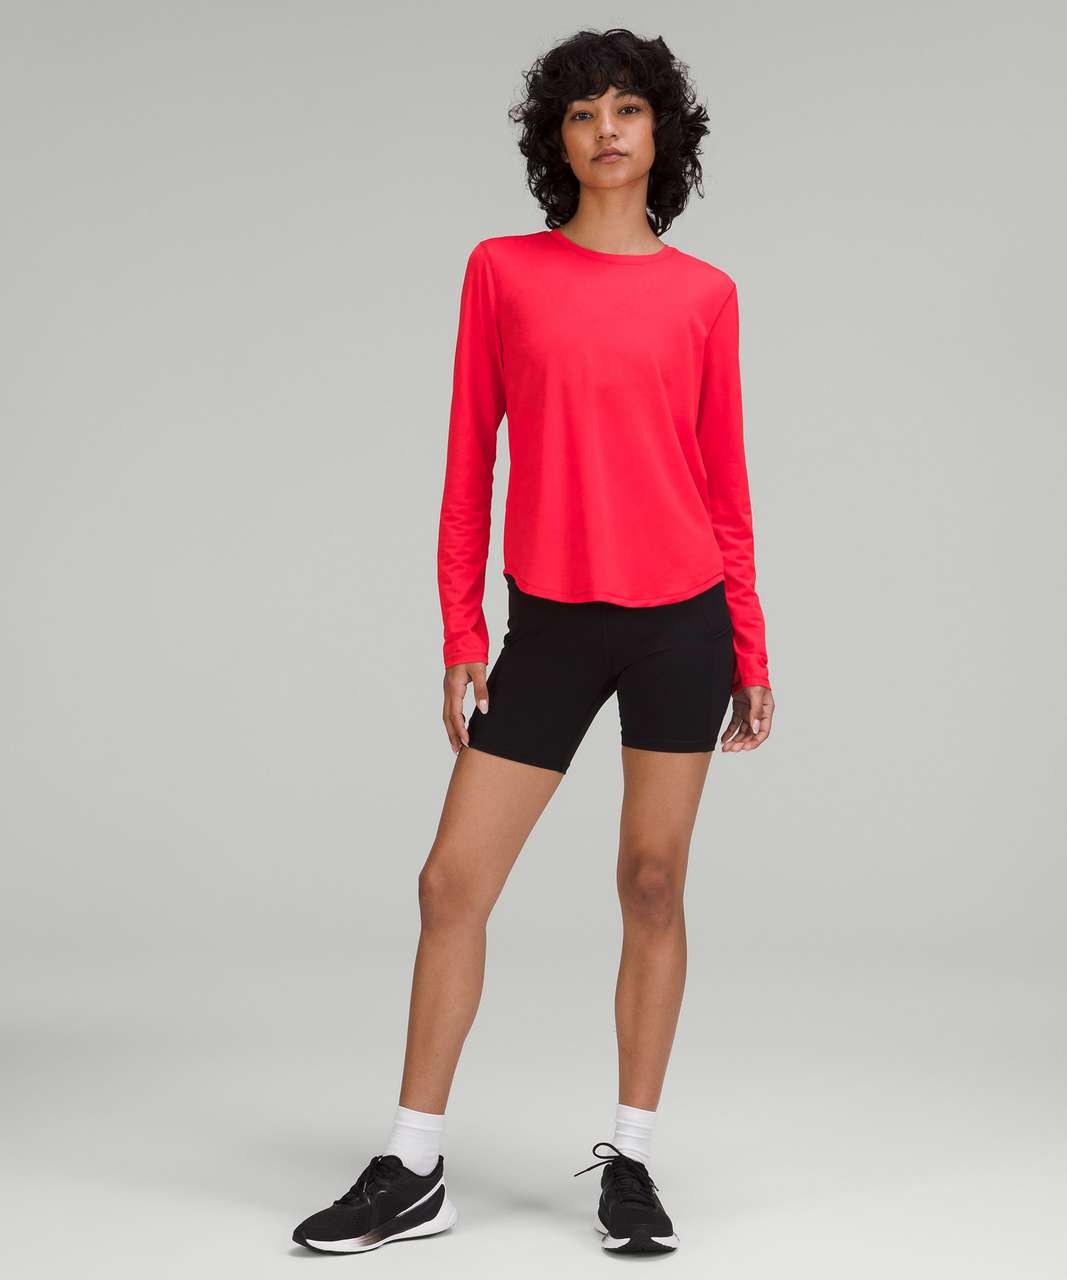 Lululemon High-Neck Running and Training Long Sleeve Shirt - Love Red